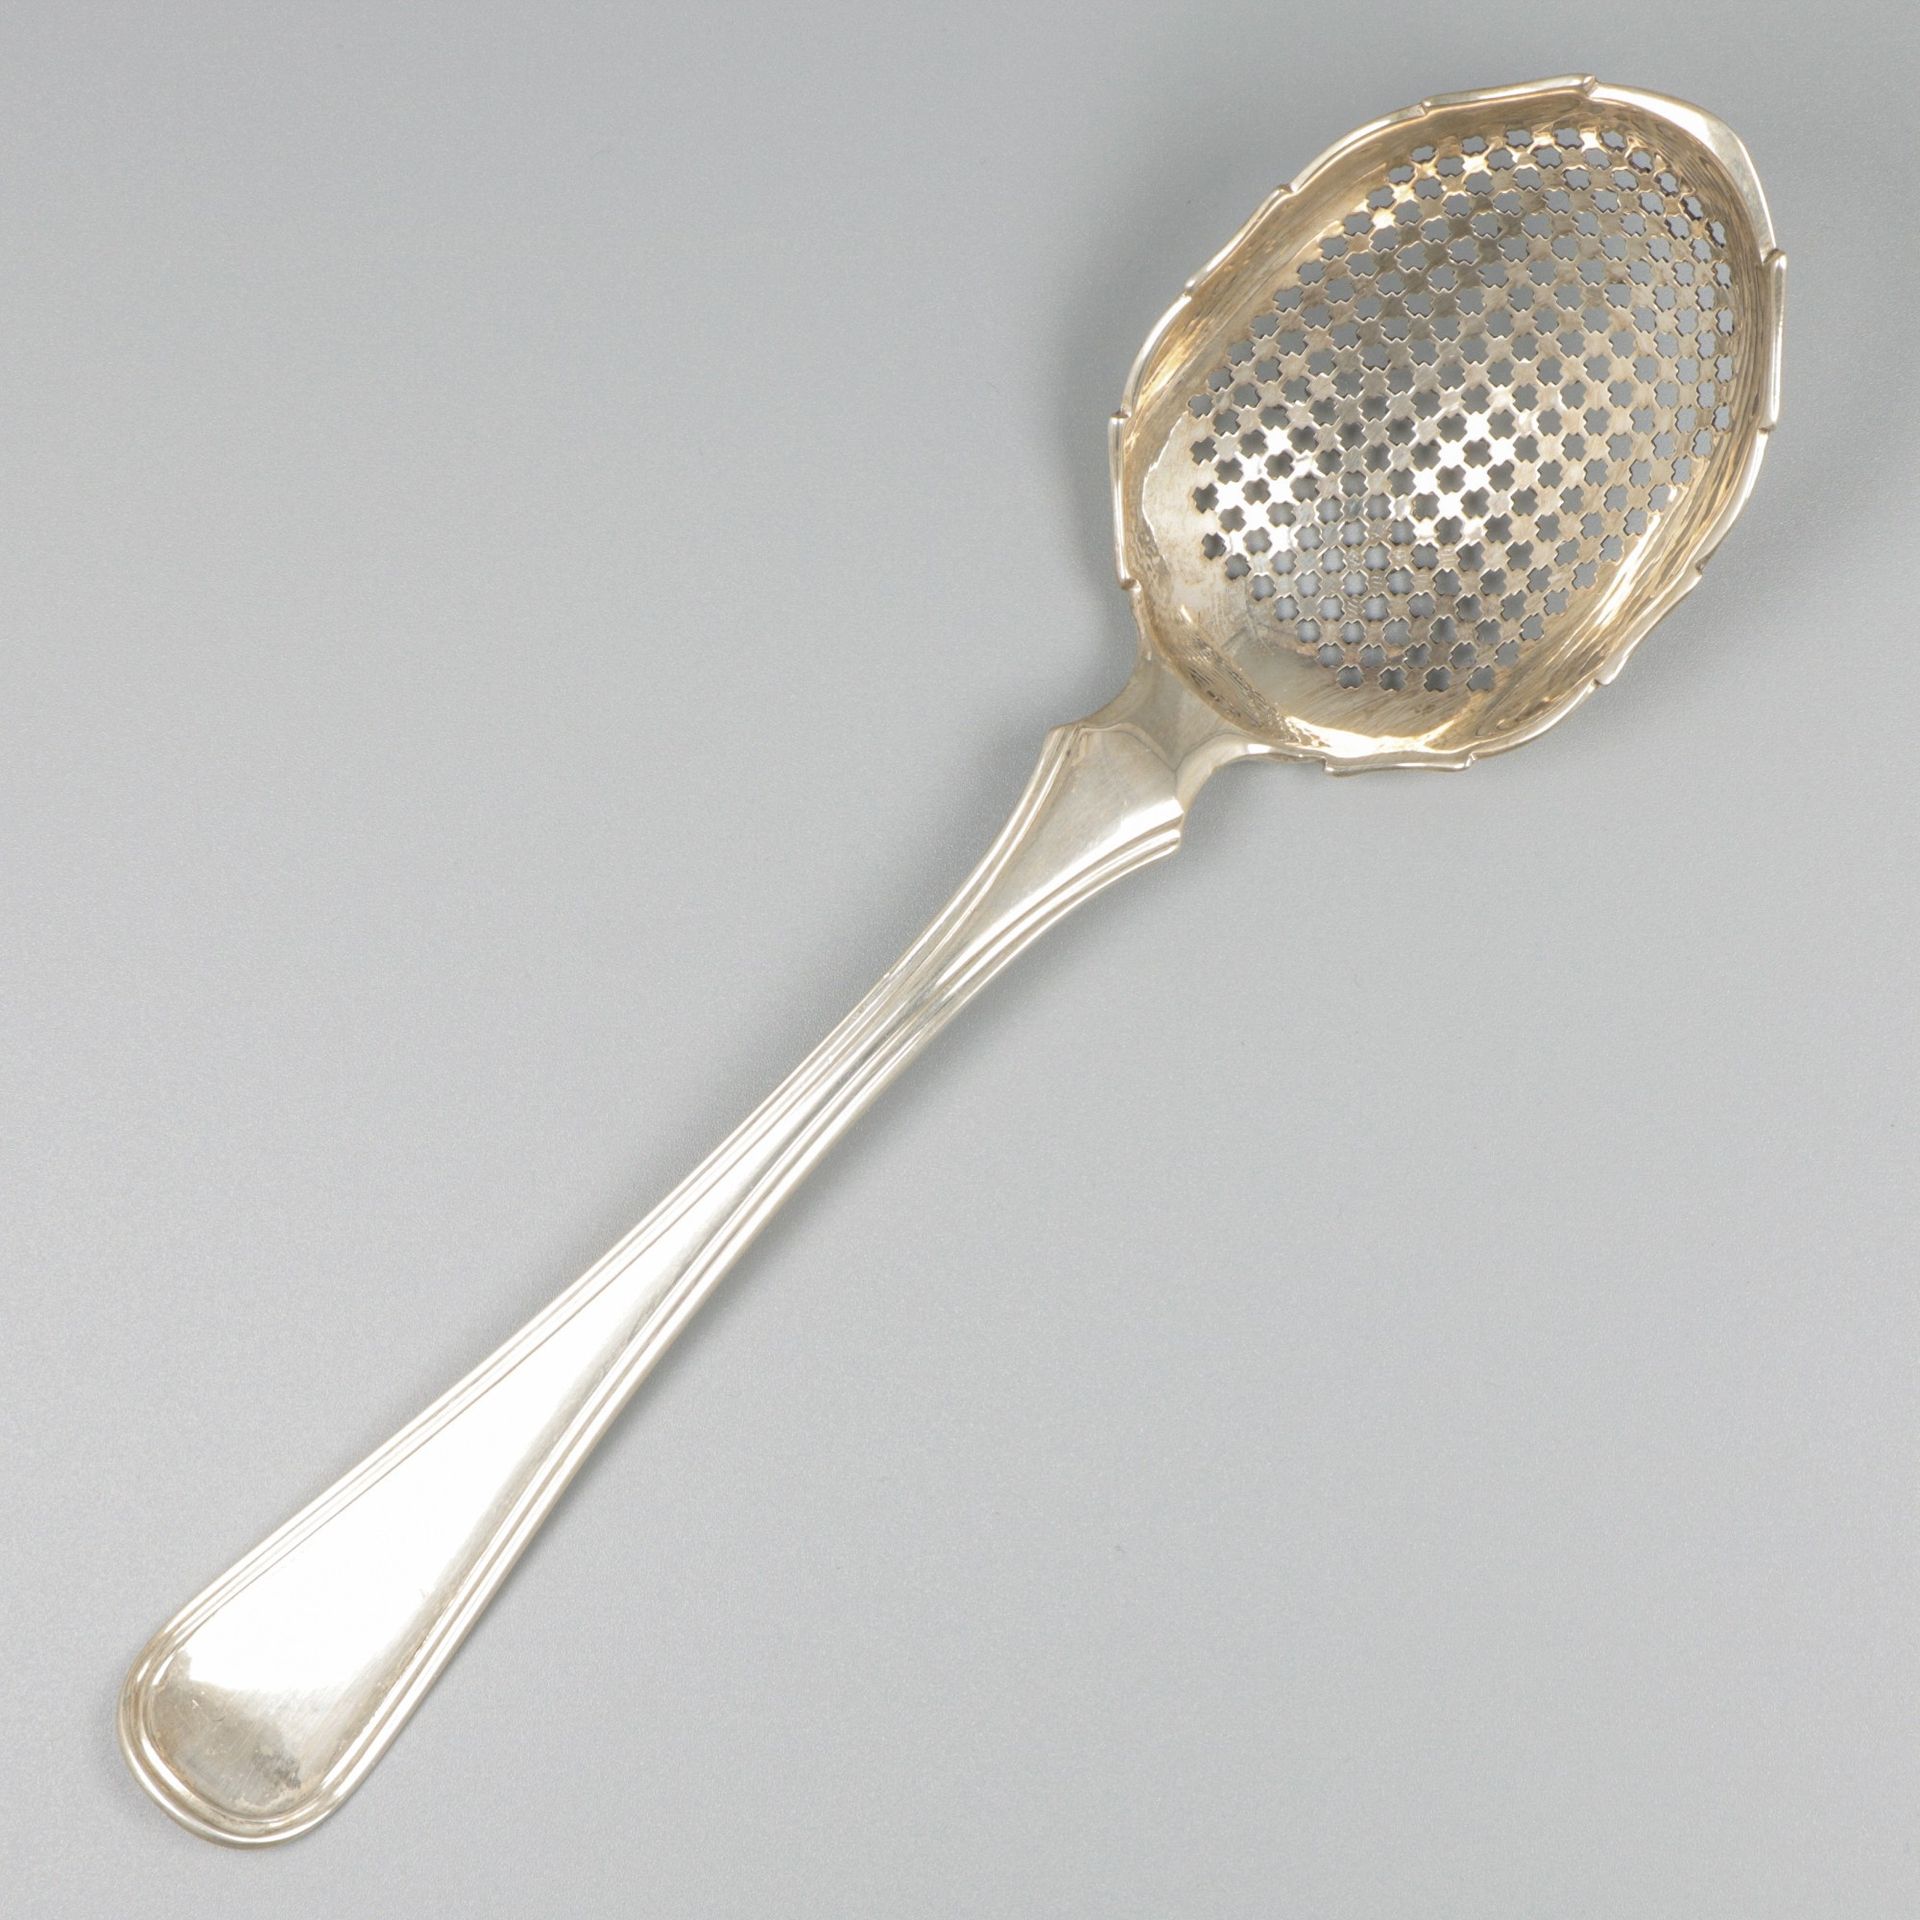 Sifter spoon silver. "Hollands Rondfilet" o filetto rotondo olandese, con ciotol&hellip;